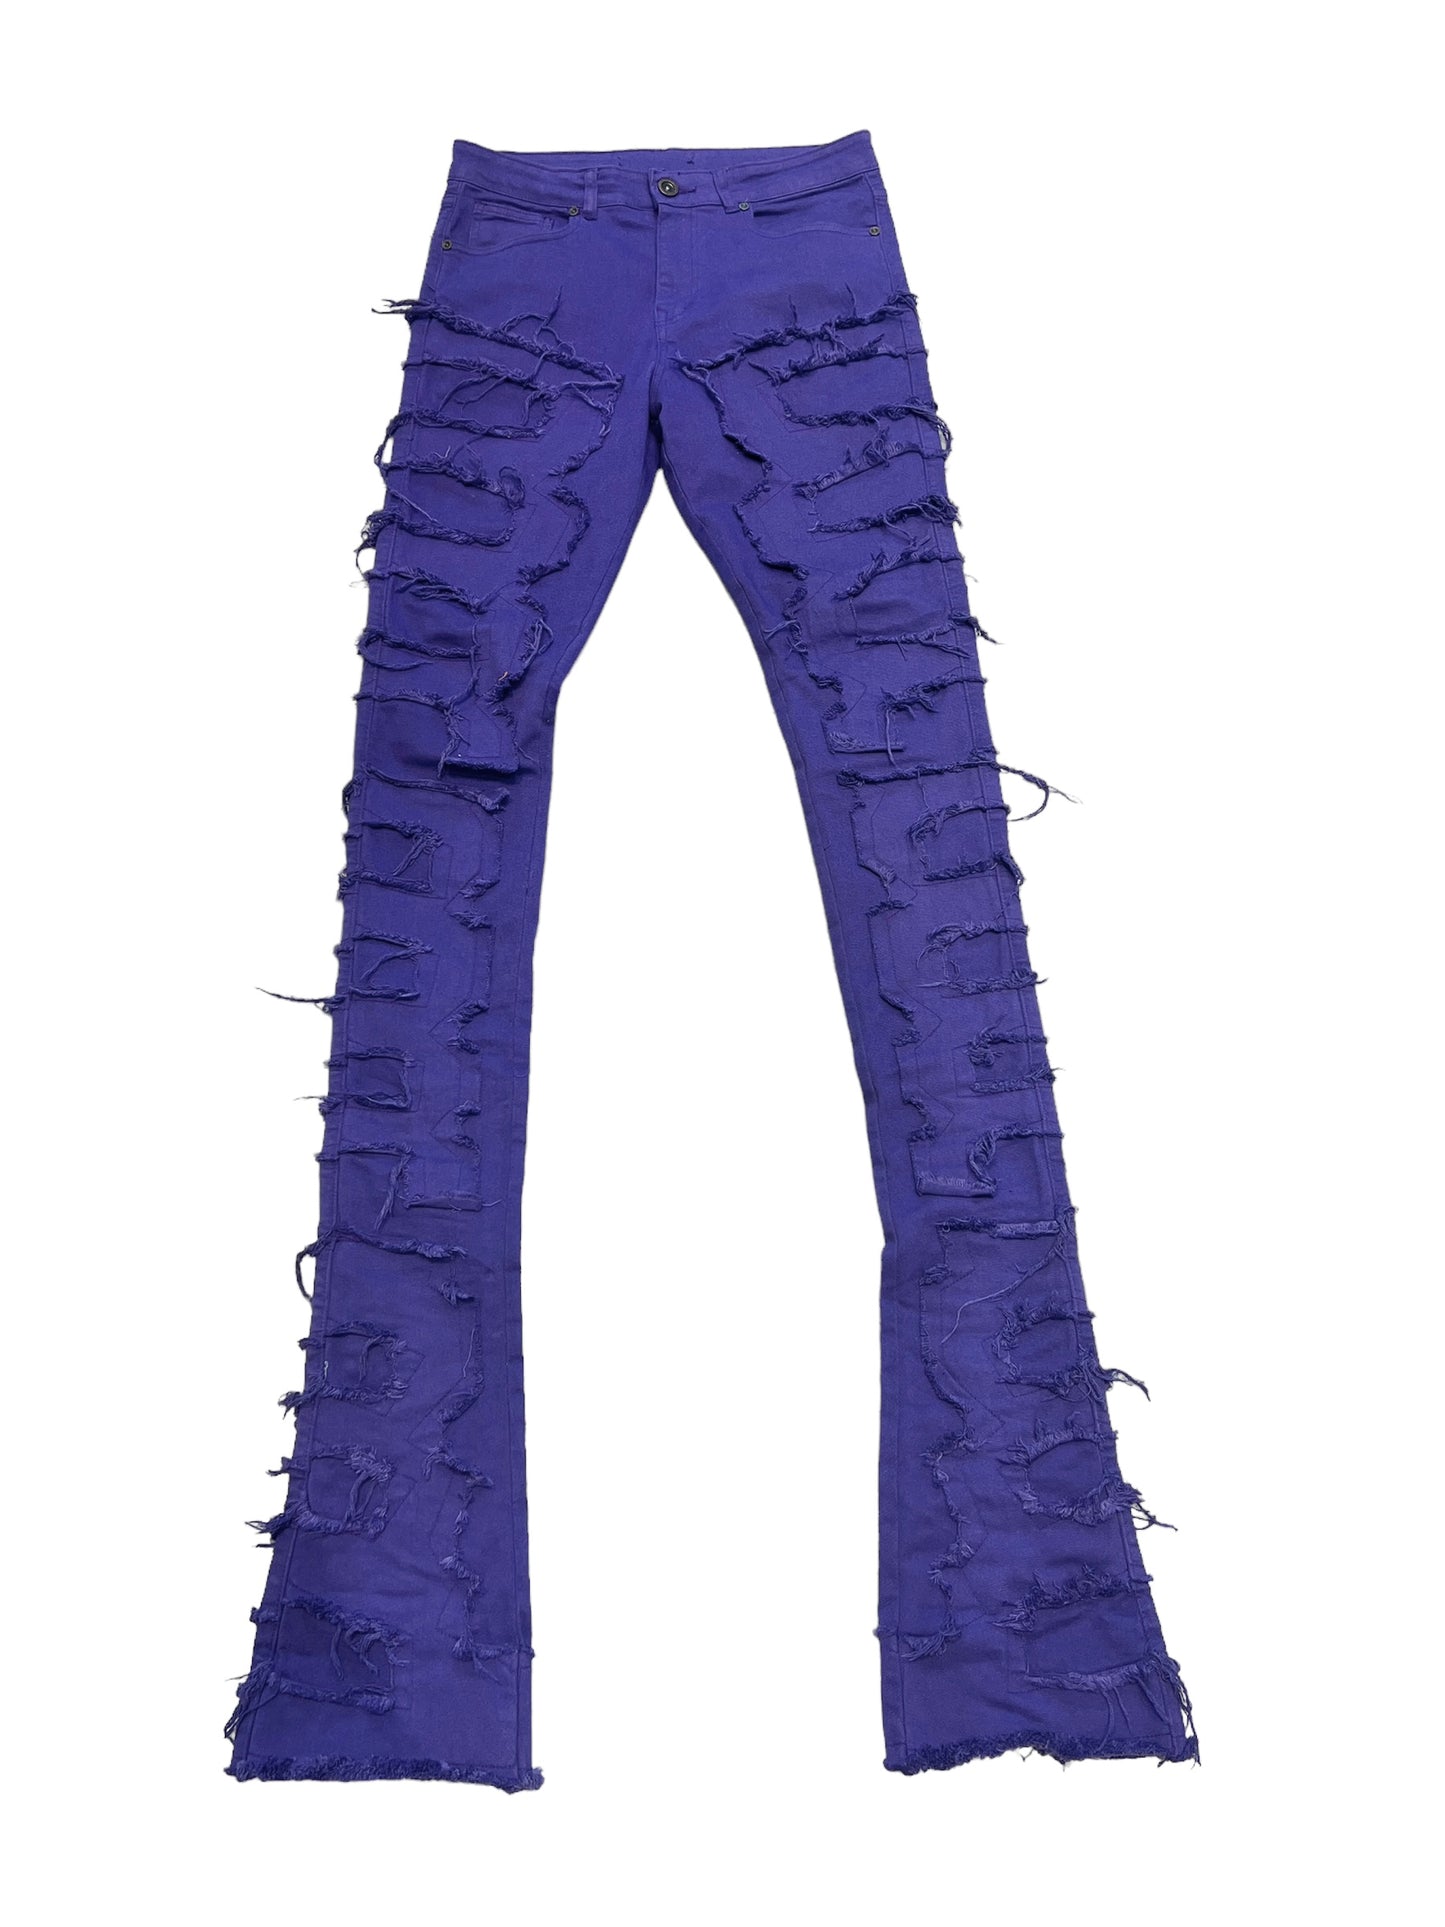 Purple Stacked Denim Jeans